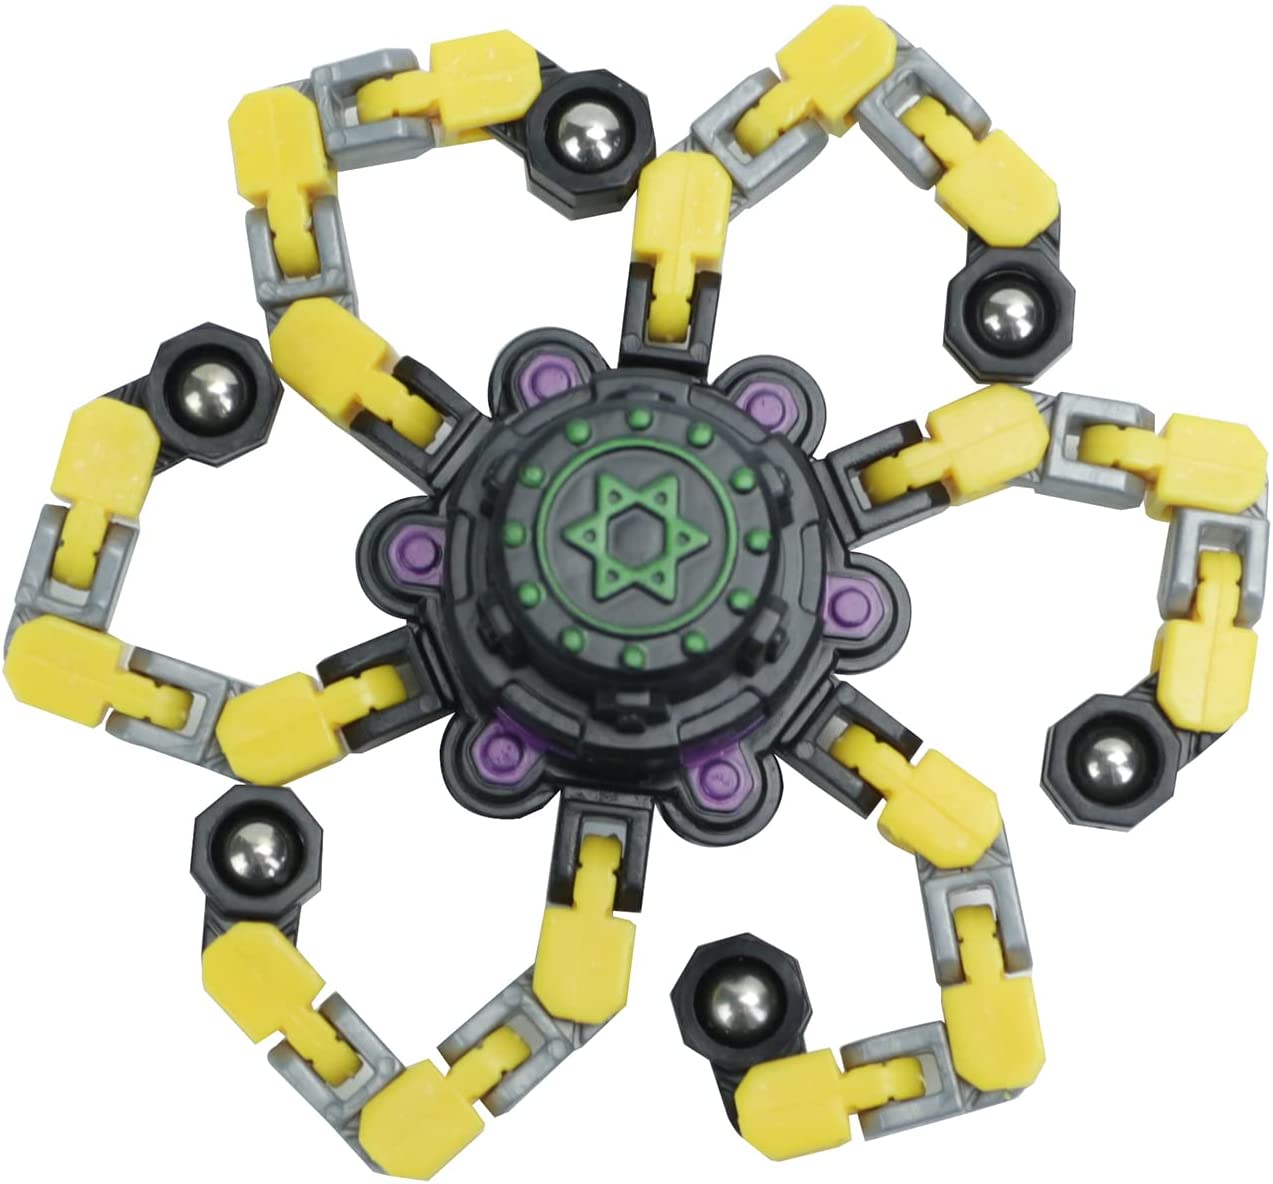 Transformer Chain Robot Fidget Spinner Toy - Lot de 4 jouets